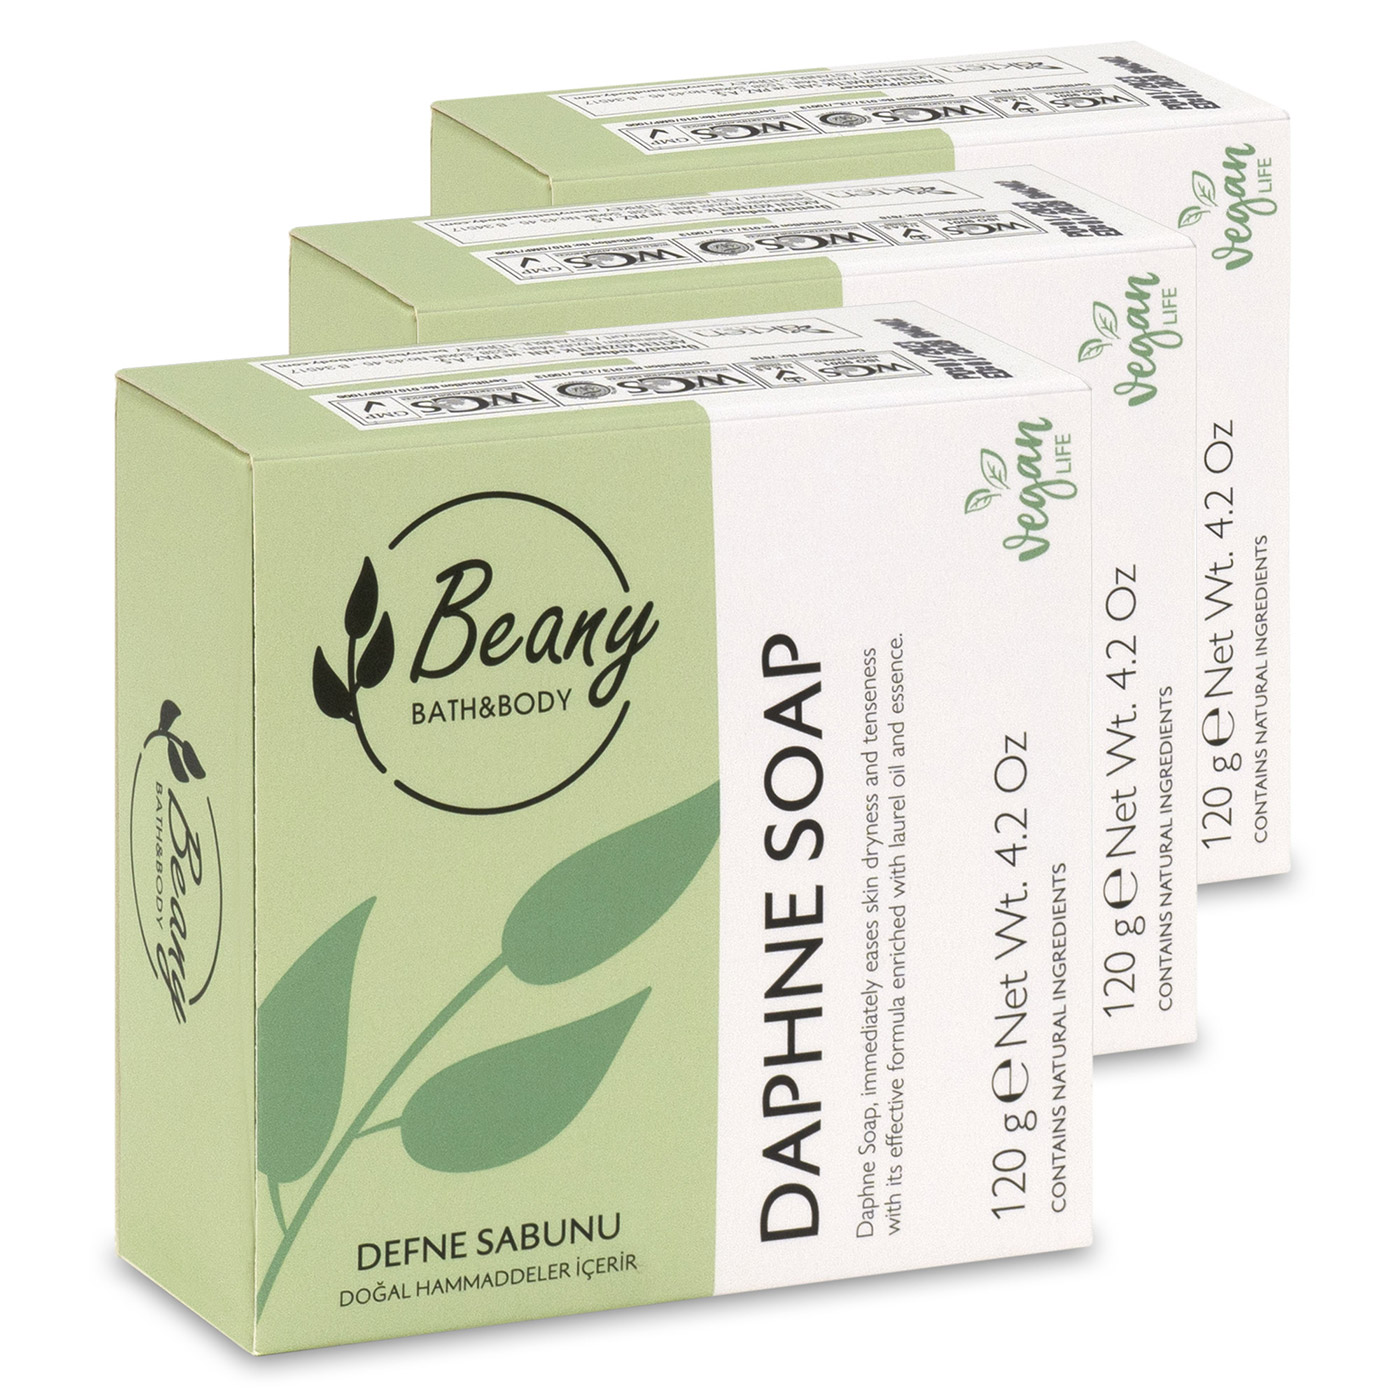 Мыло Beany твердое натуральное турецкое Daphne Extract Soap лавровое 120г х 3шт. мыло beany твердое натуральное турецкое daphne extract soap лавровое